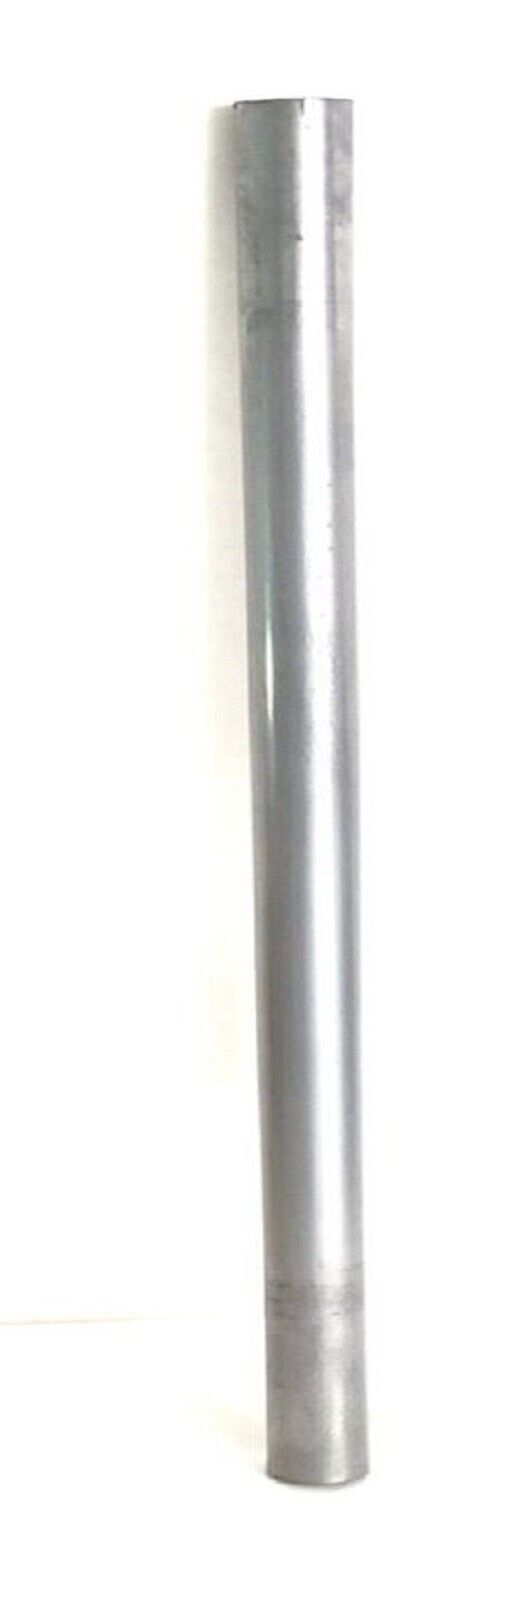 Bowflex Body Tower Strength System Back Pad Tube Rod BT-BPTR22 1/4-1.0